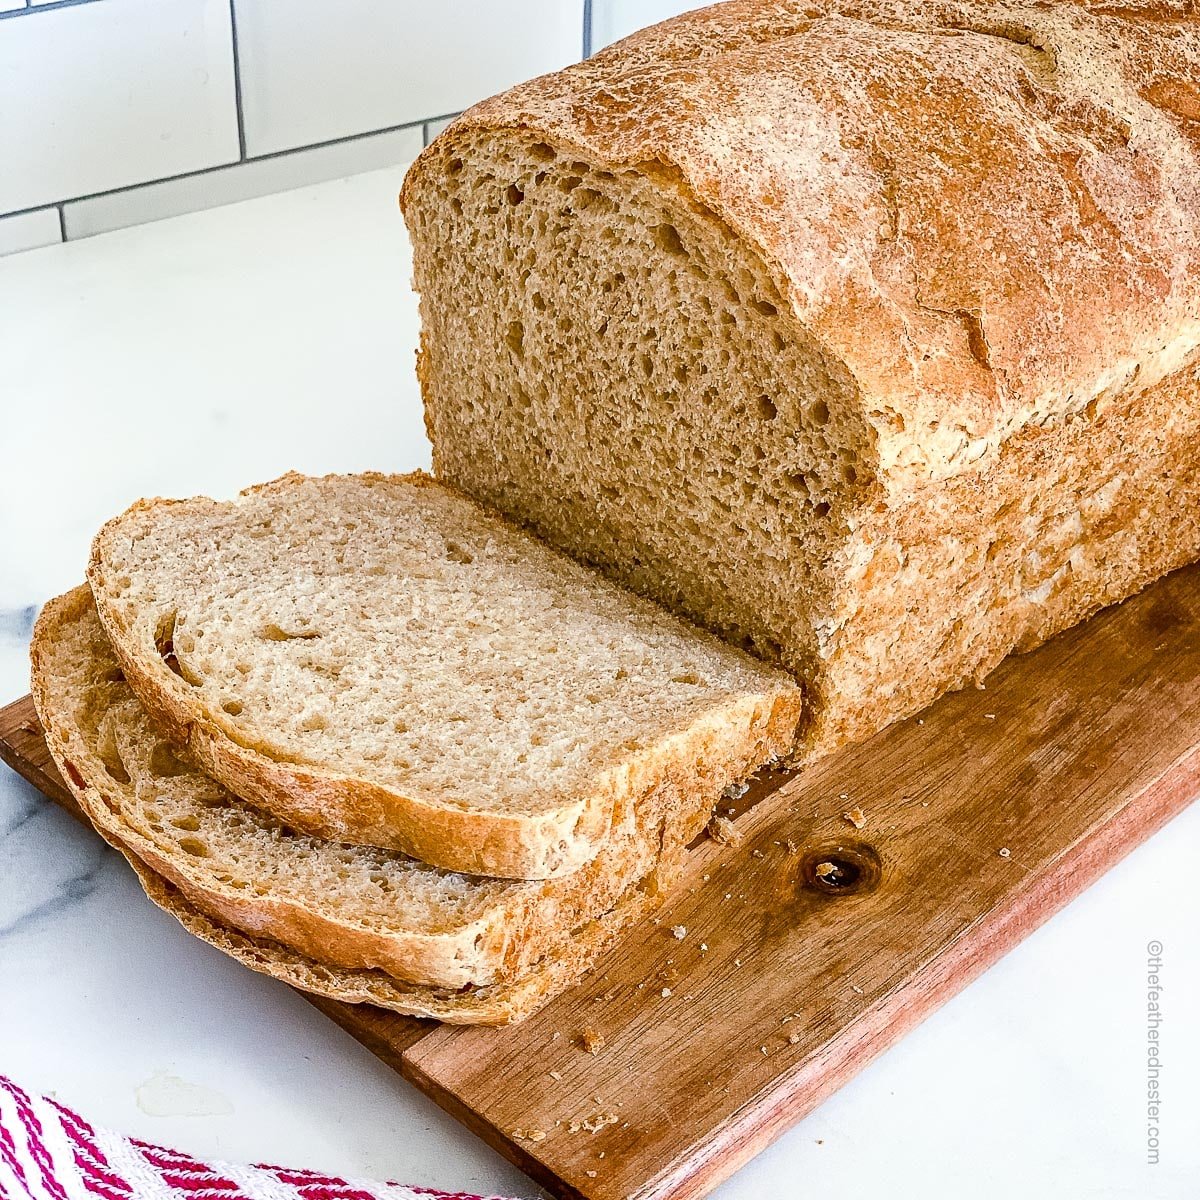 https://thefeatherednester.com/wp-content/uploads/2022/03/whole-wheat-sourdough-sandwich-bread-3-2.jpg